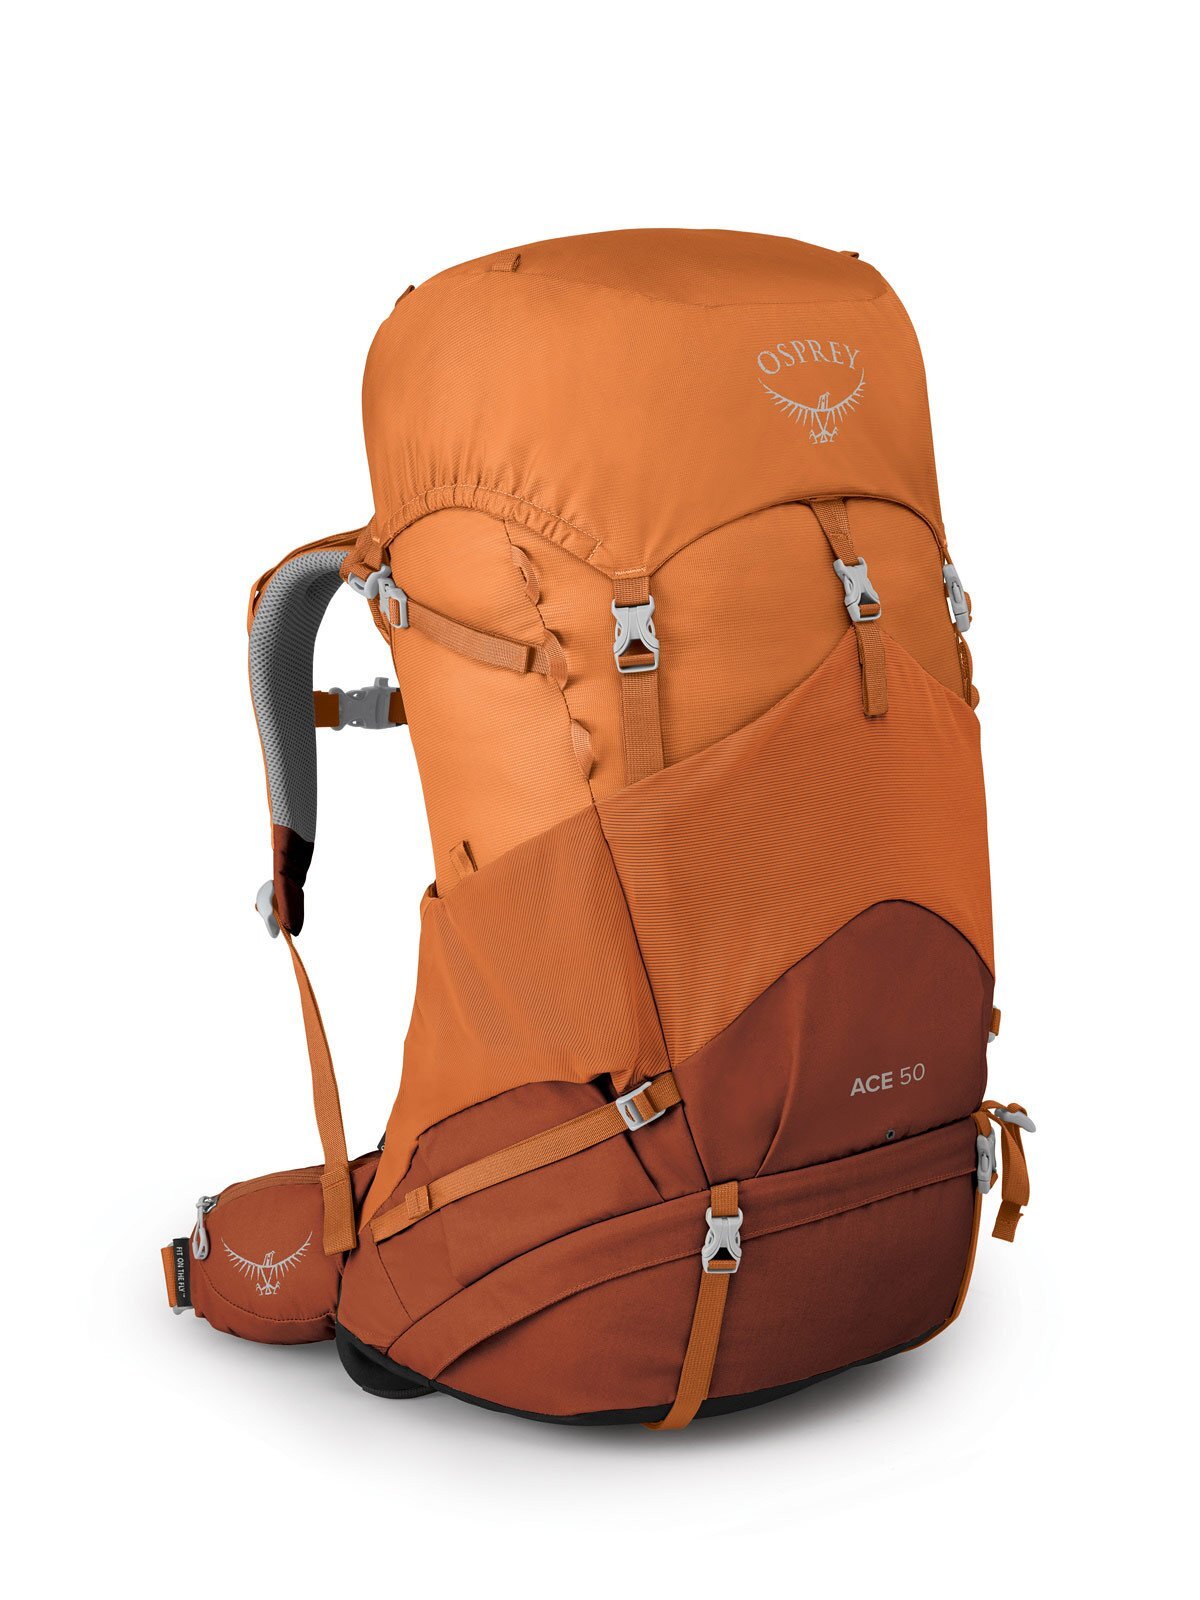 Osprey Ace 50 Kids Hiking Backpack - Orange Sunset